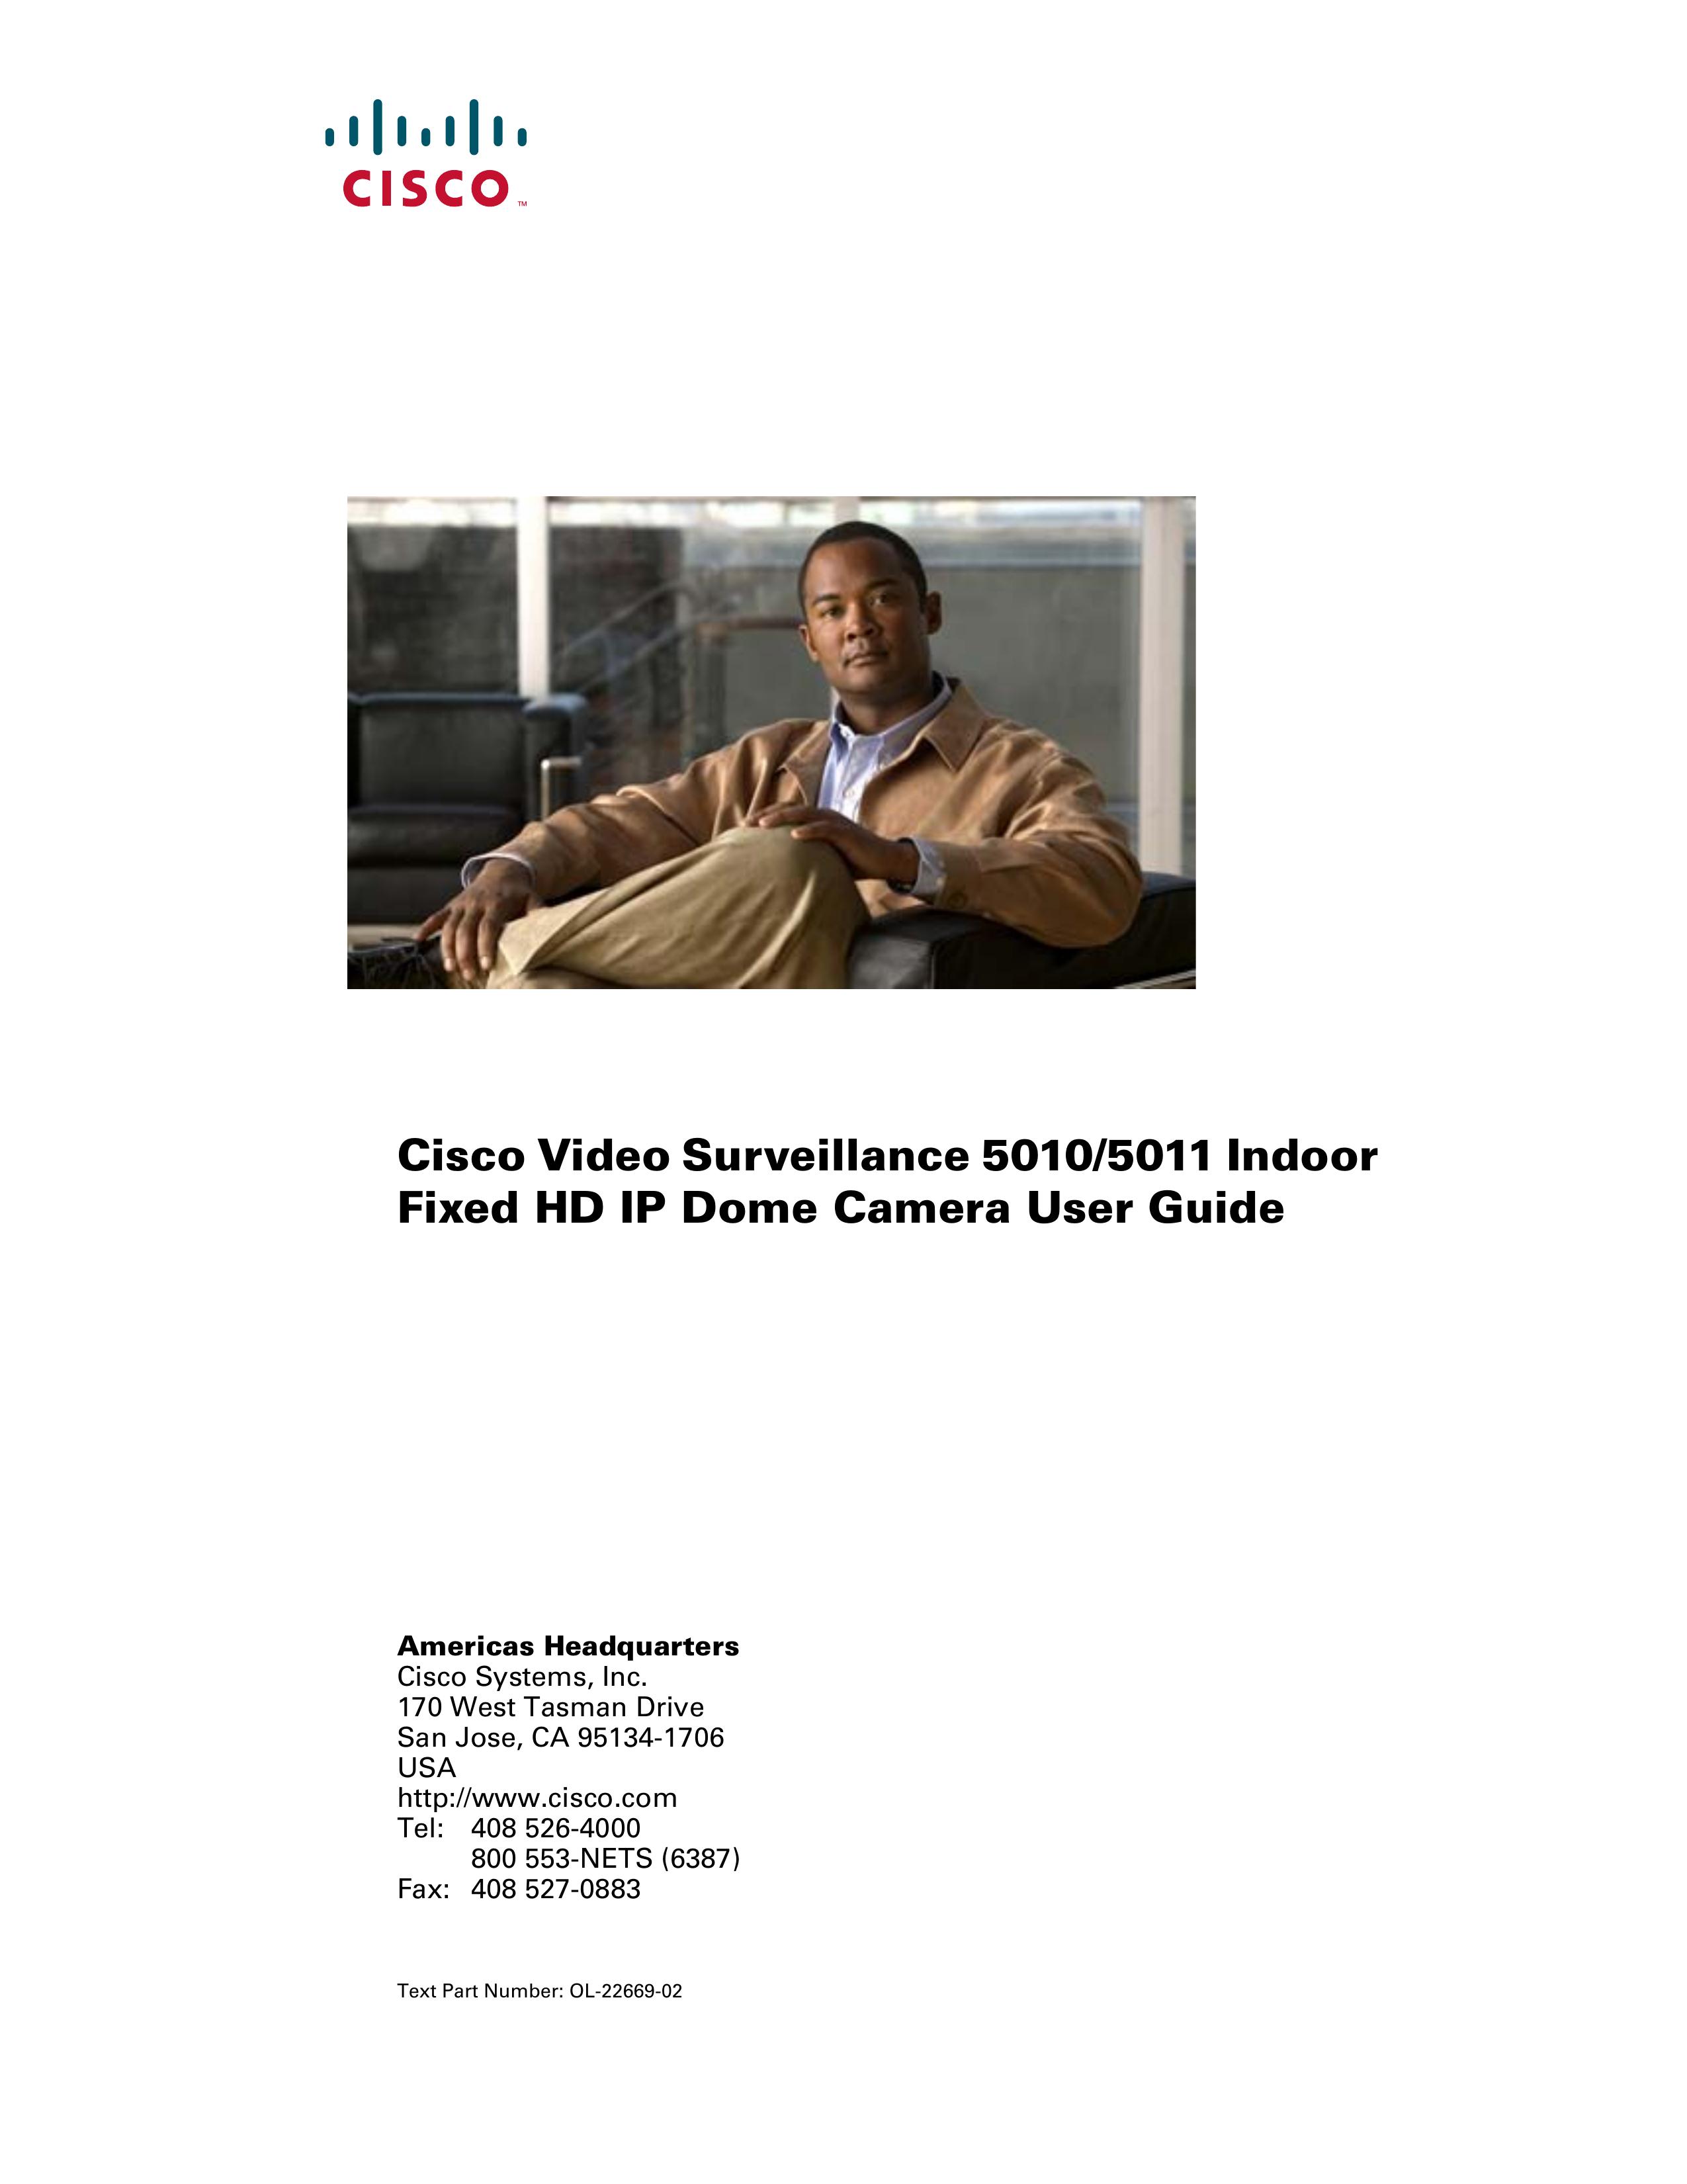 Cisco Systems 5010 Security Camera User Manual